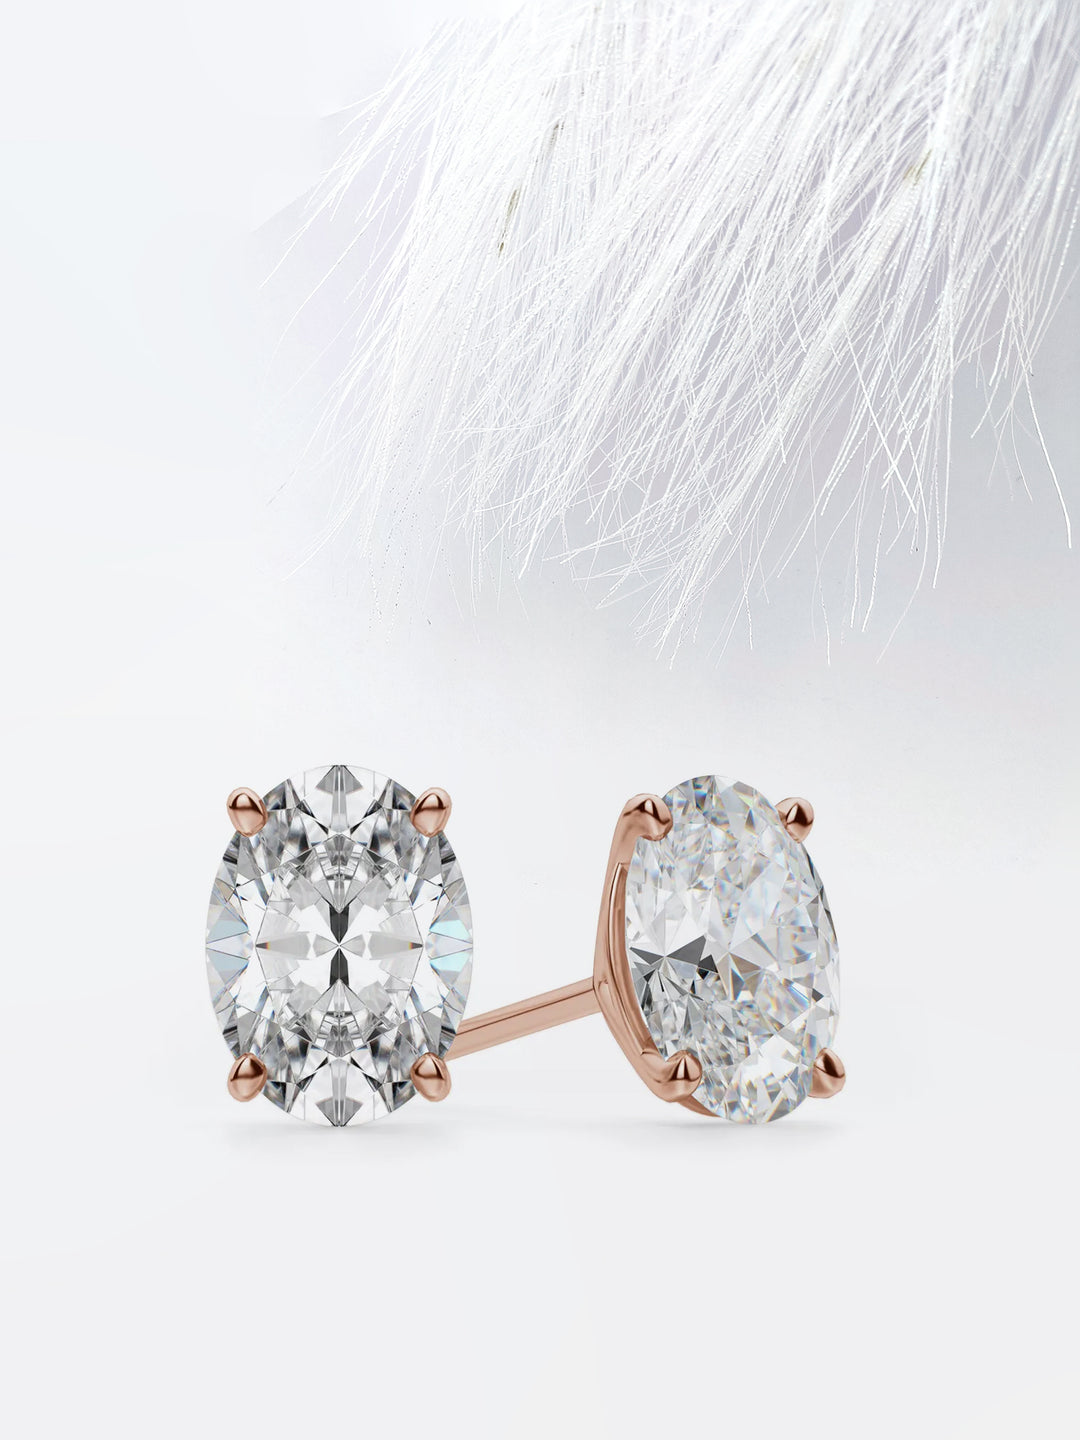 Oval Cut Moissanite Stud Diamond Earrings for Women